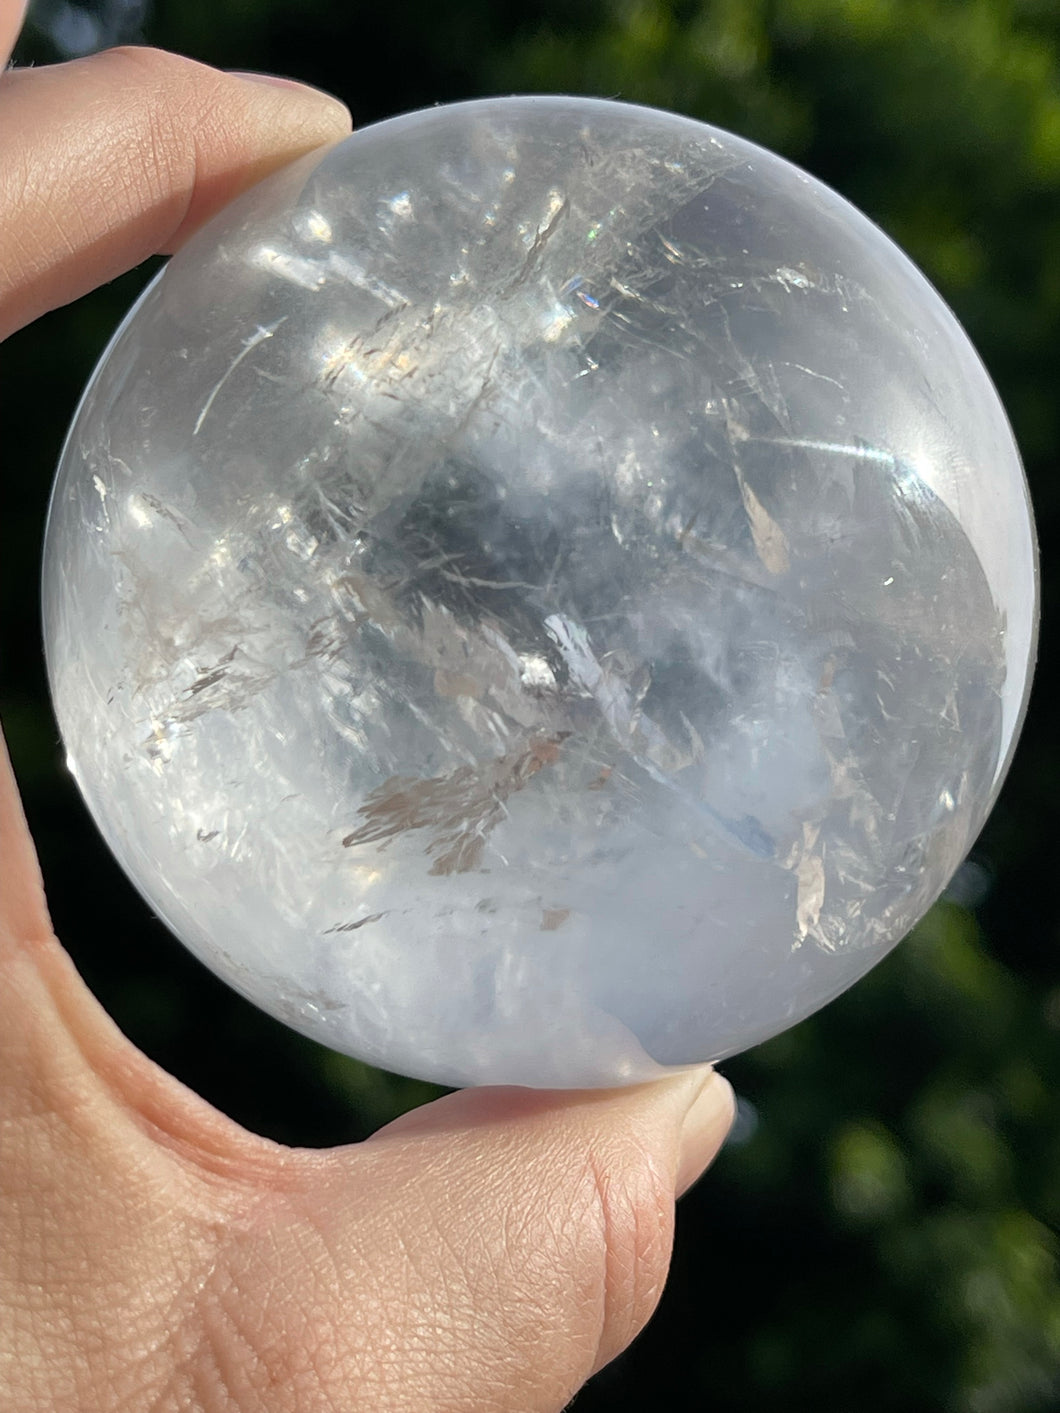 A Grade Beautiful Clarity Brazilian Clear Quartz Crystal Sphere